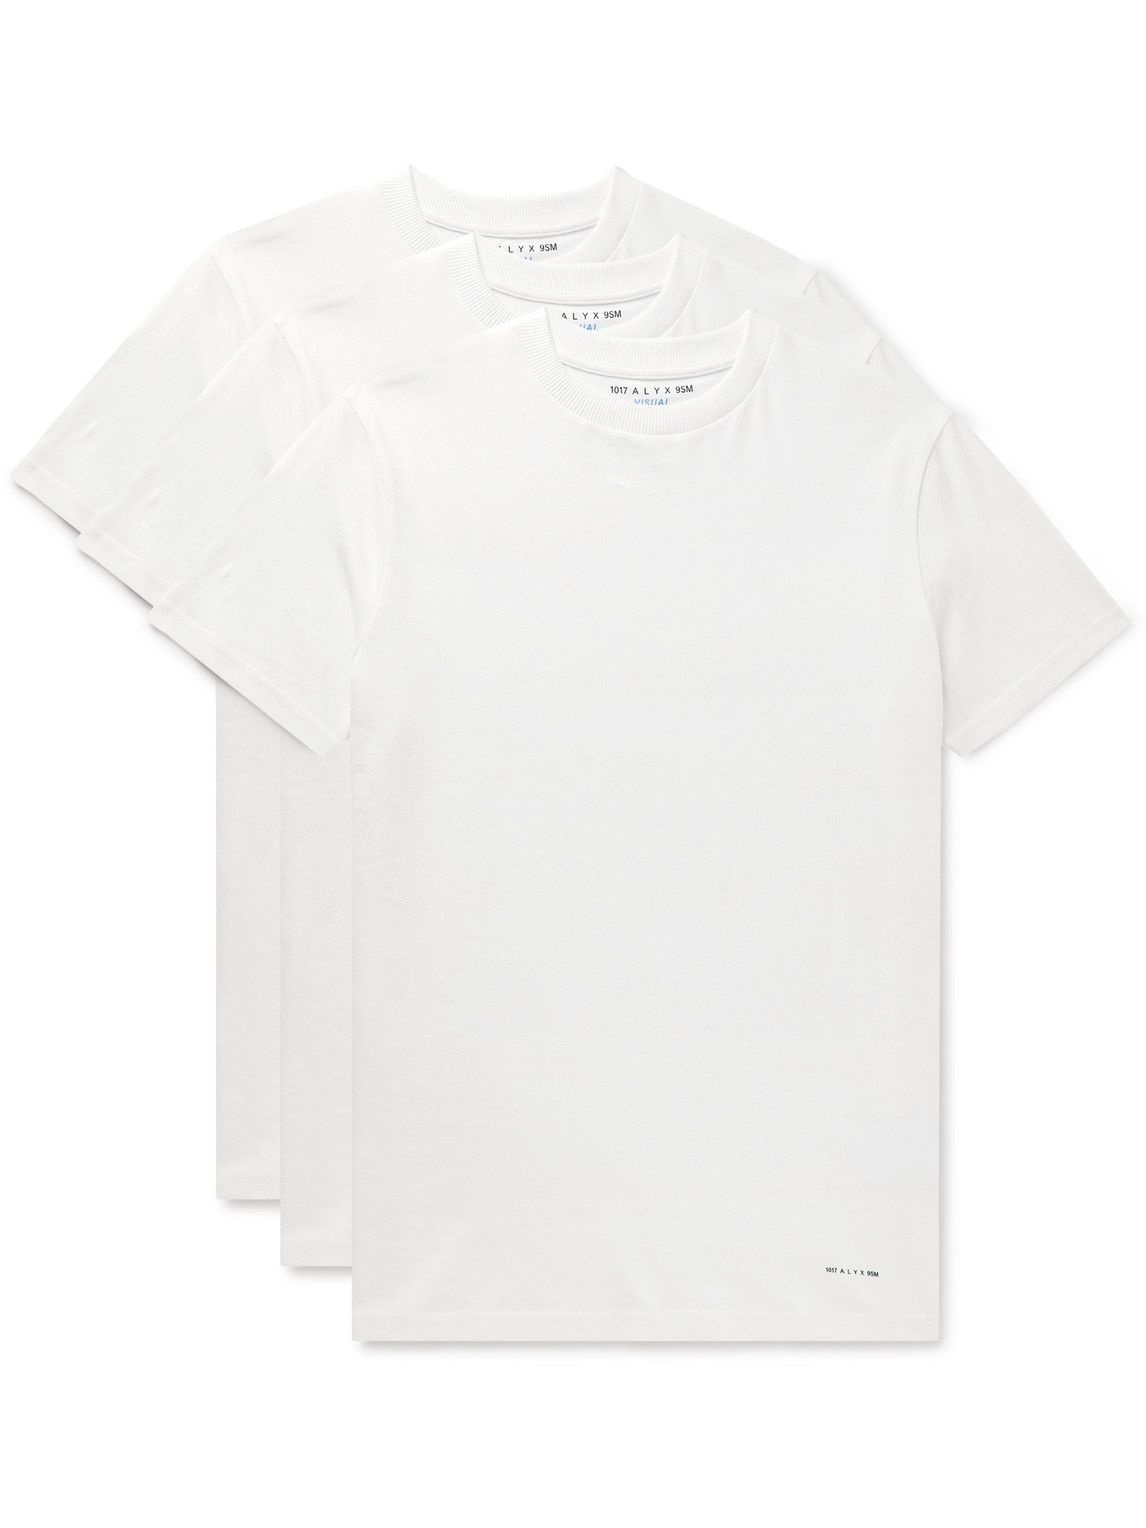 1017 ALYX 9SM - Three-Pack Cotton-Jersey T-Shirts - White 1017 ALYX 9SM